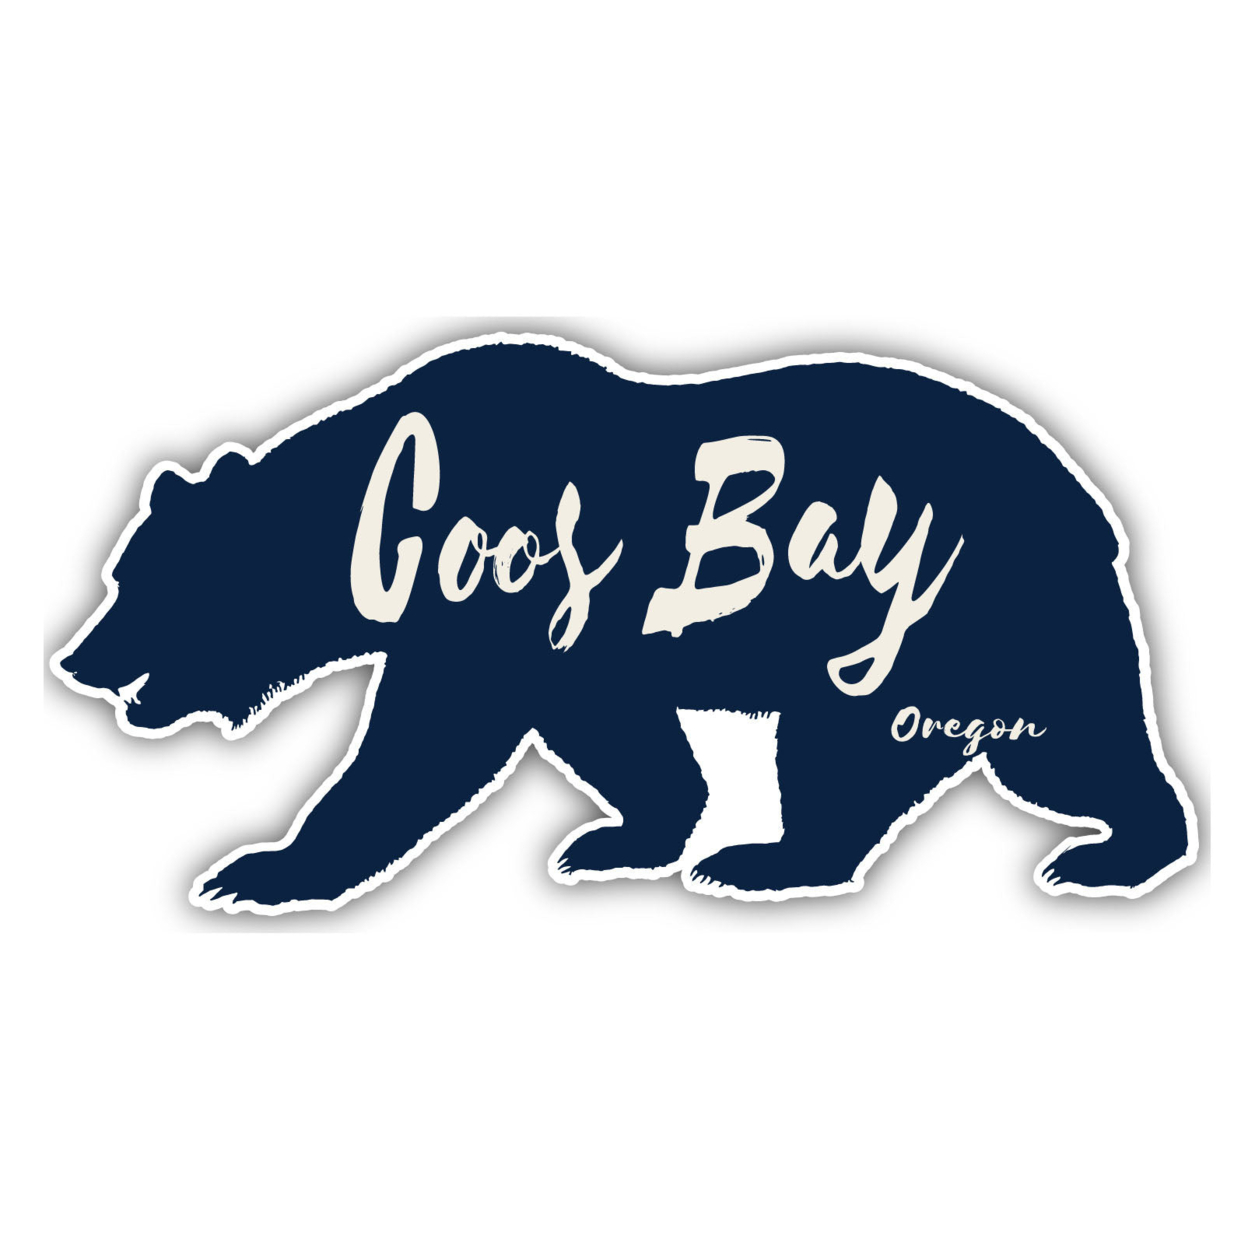 Coos Bay Oregon Souvenir Decorative Stickers (Choose Theme And Size) - Single Unit, 2-Inch, Camp Life